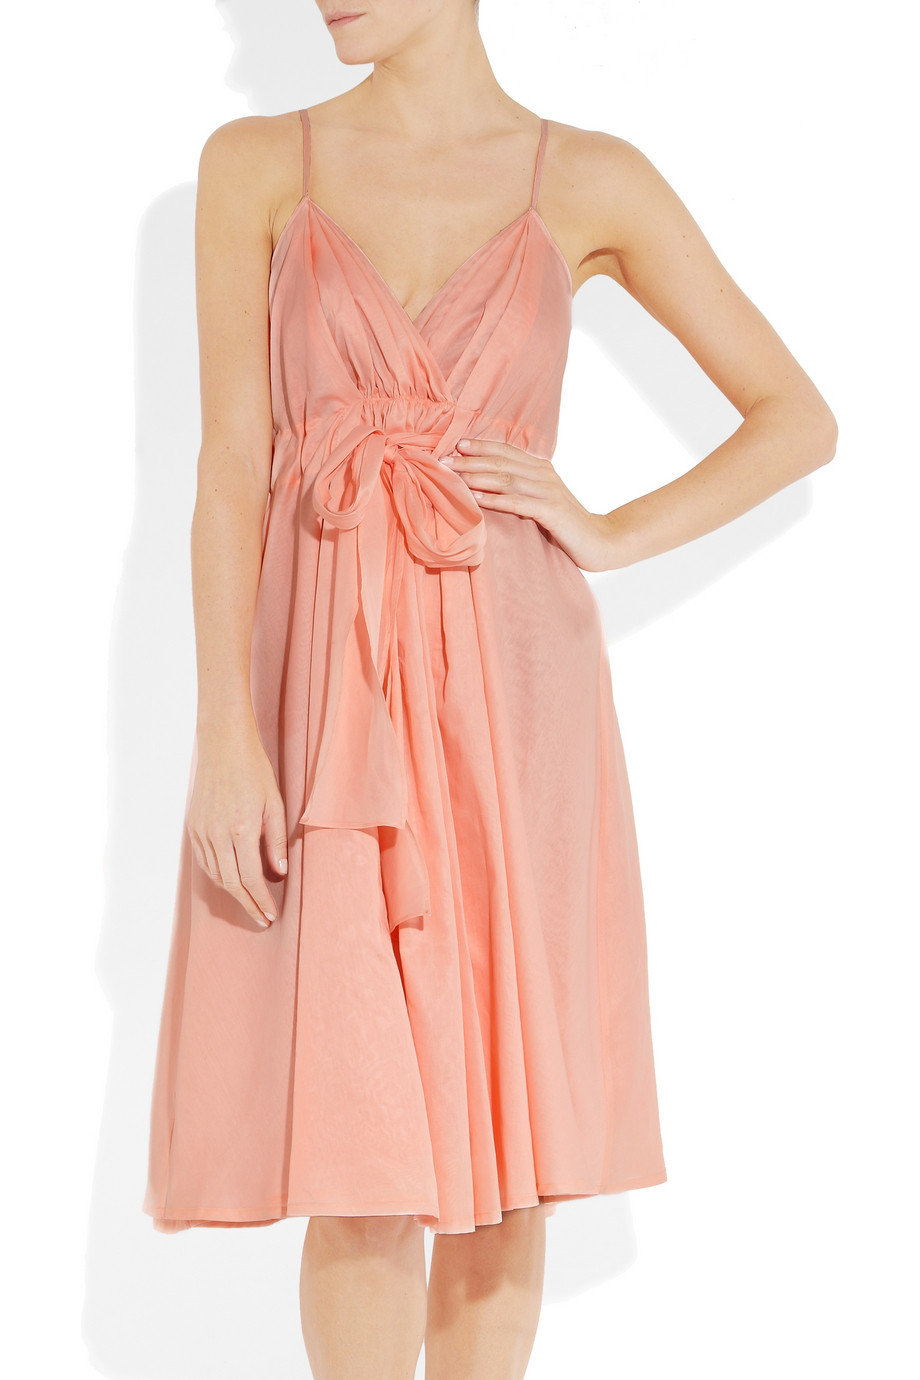 Jil sander Zenith Bow-front Cotton-organdy Dress in Pink | Lyst